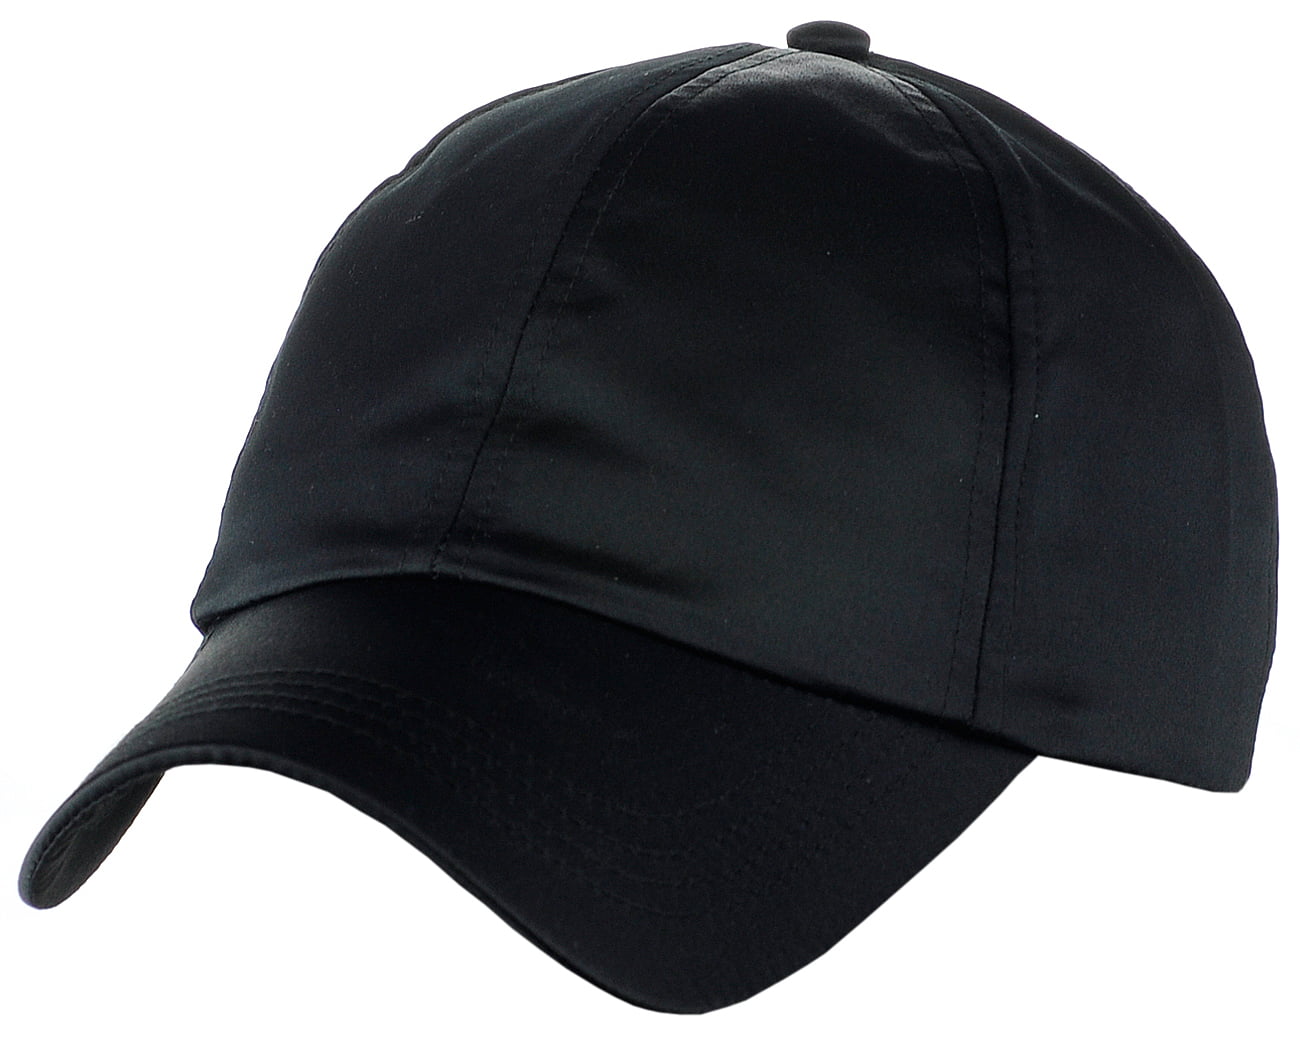 Women's Adjustable Satin Feel Low Profile Baseball Dad Cap Hat, Black